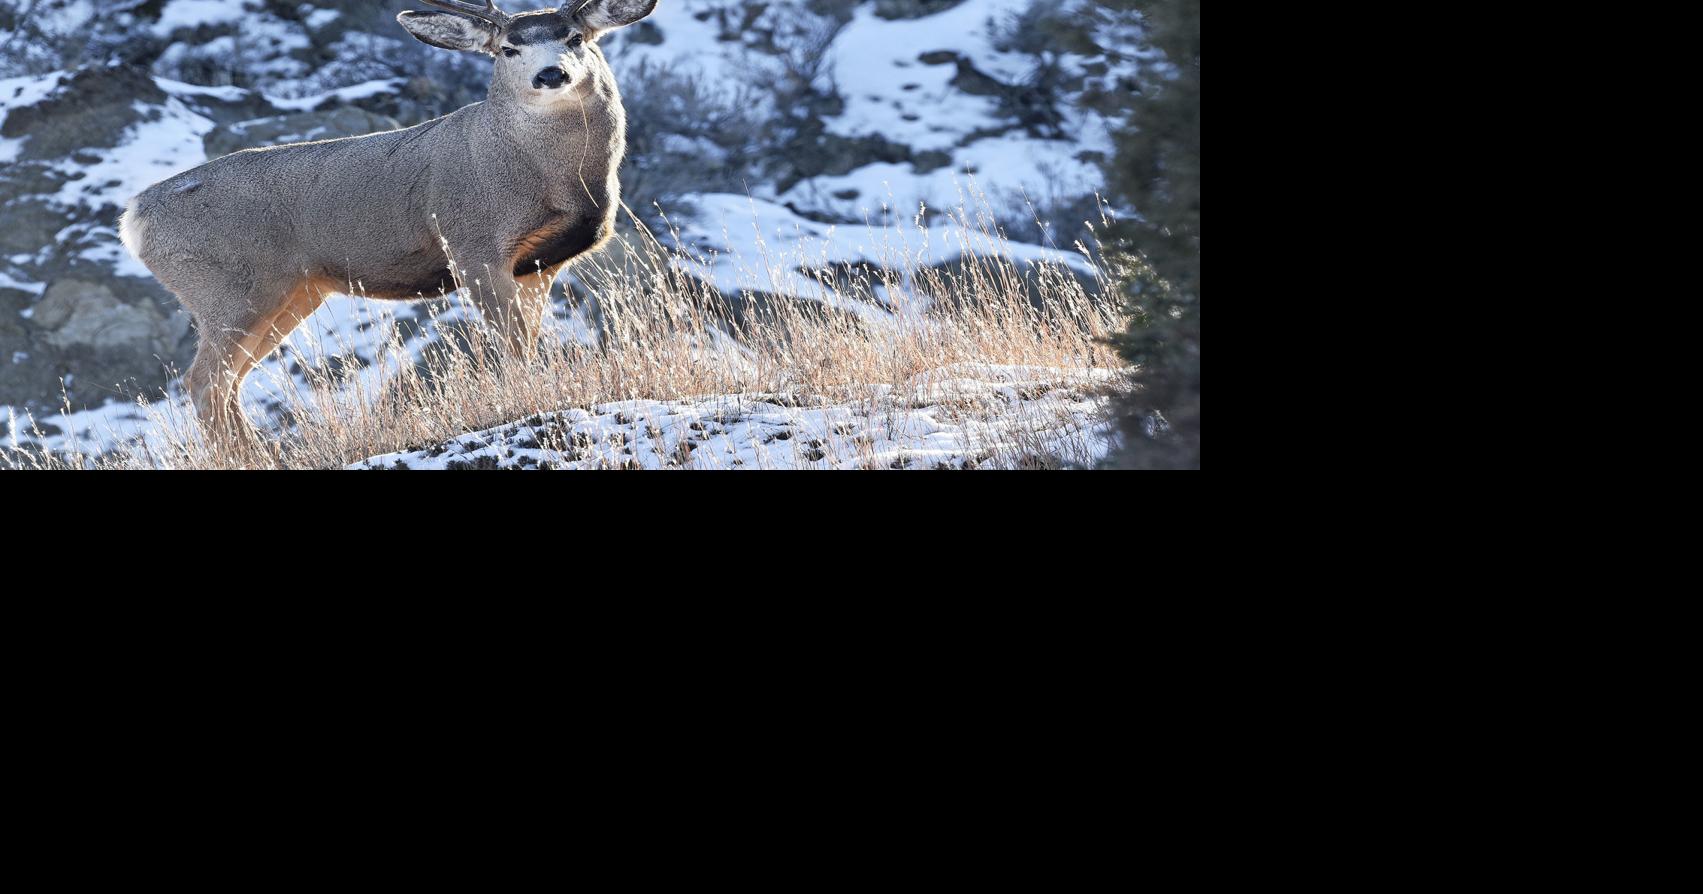 Deer license application deadline nears